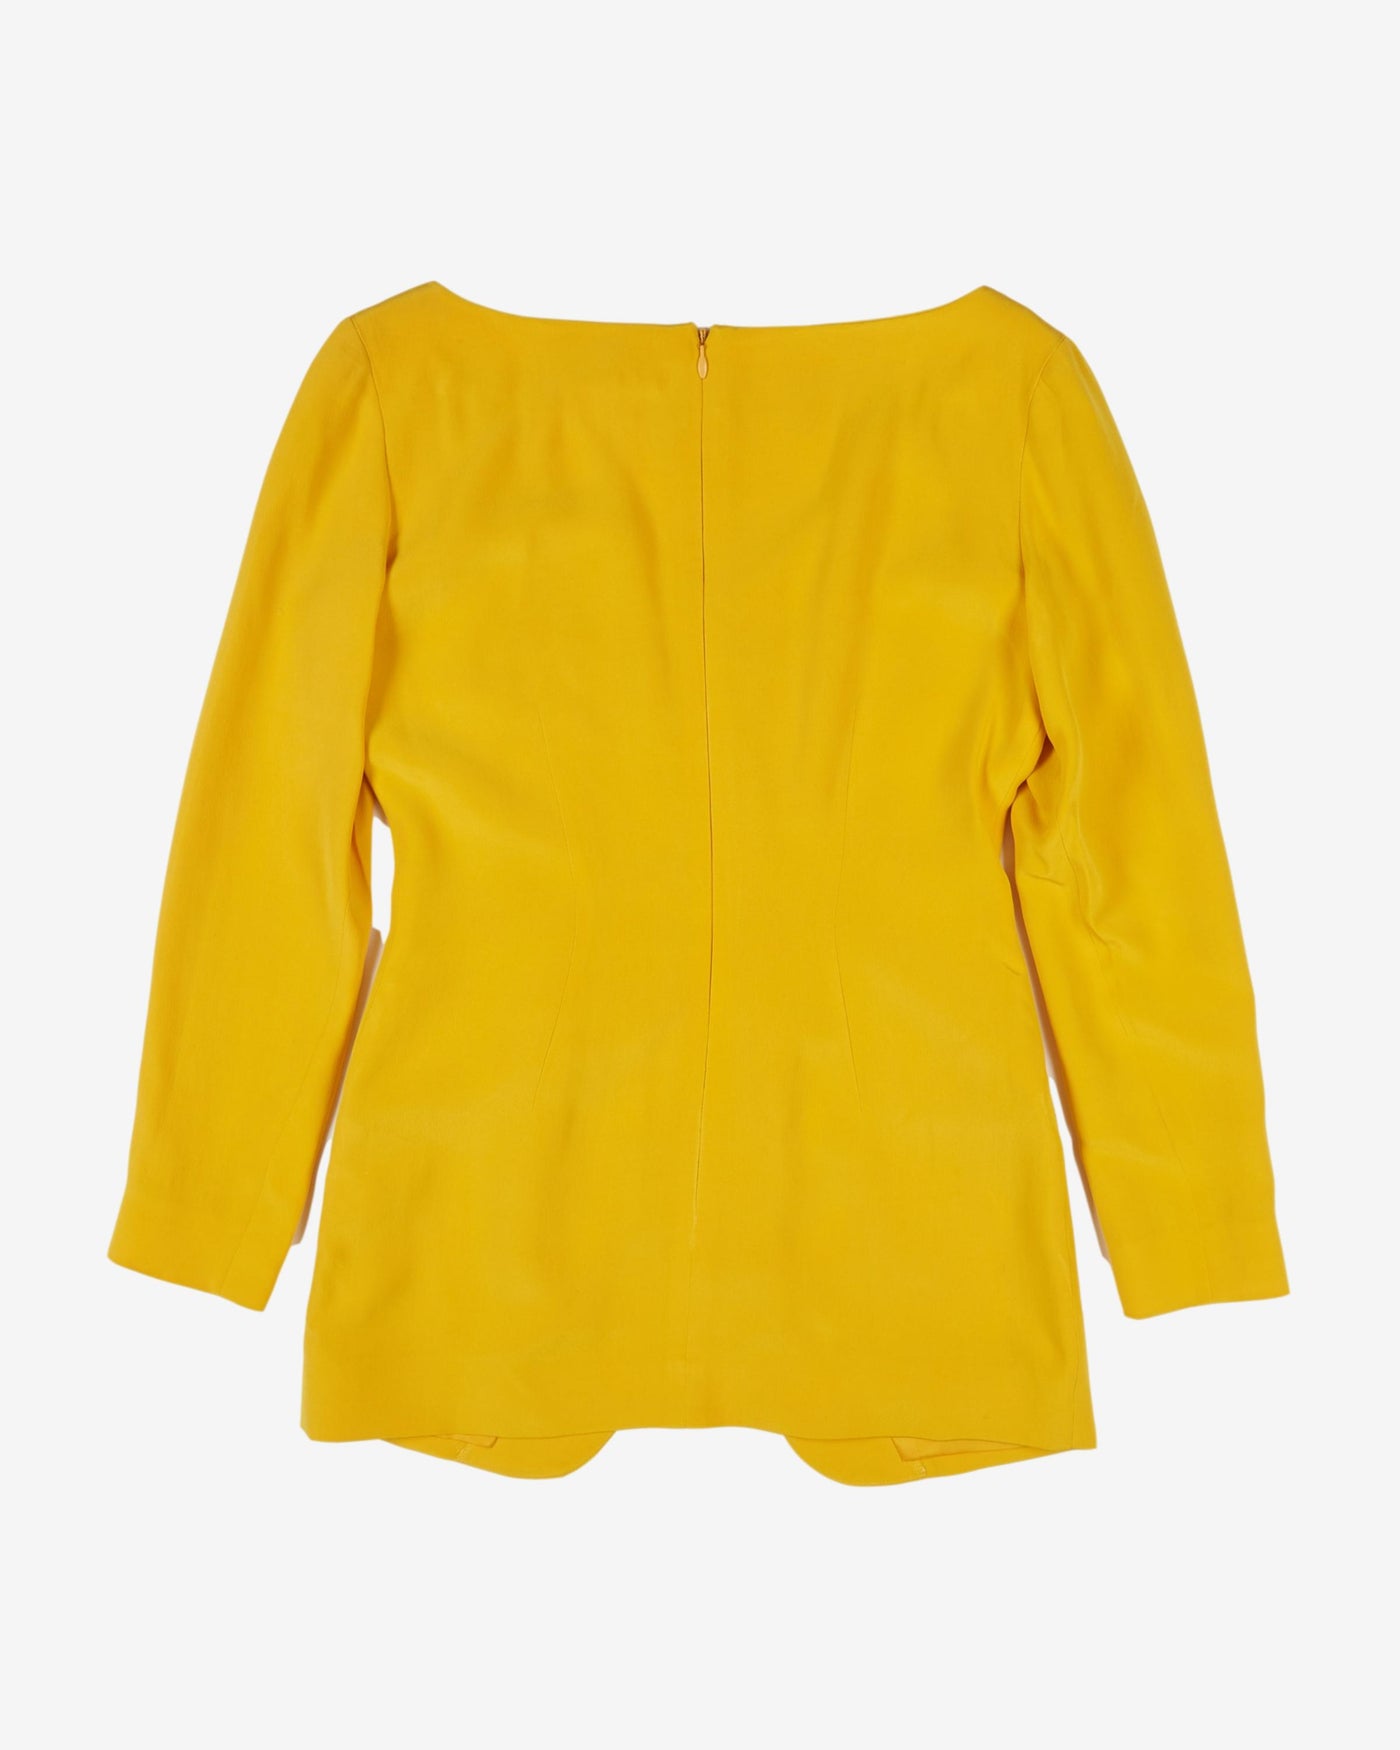 Donna Karan yellow silk wrap style jacket - S